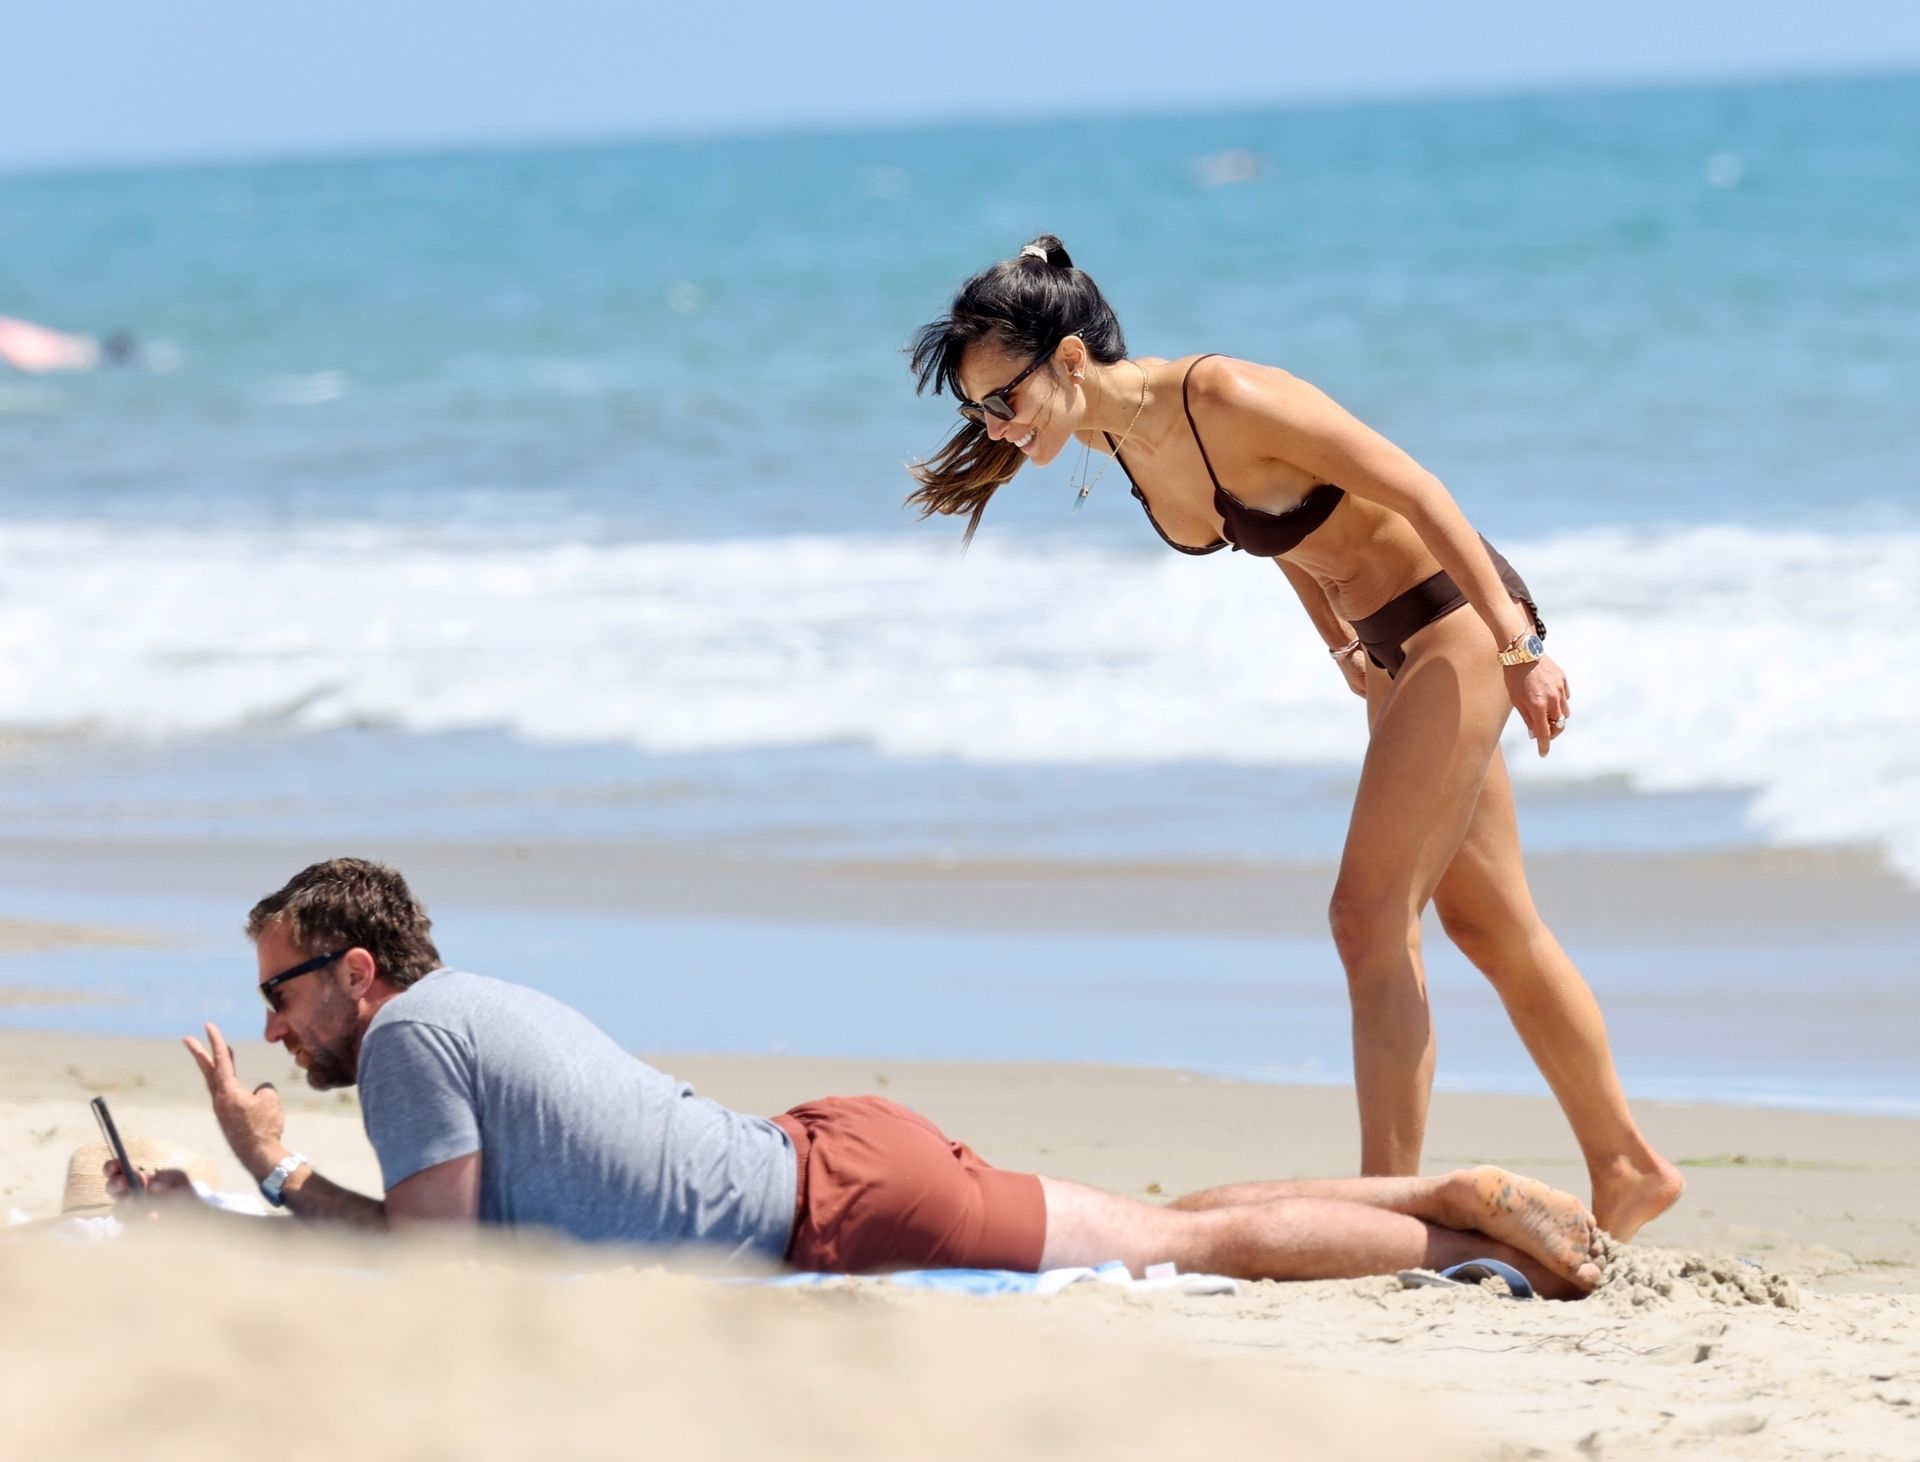 Jordana Brewster & Mason Morfit Enjoy a Romantic Beach Day Packed with PDA (68 Photos)